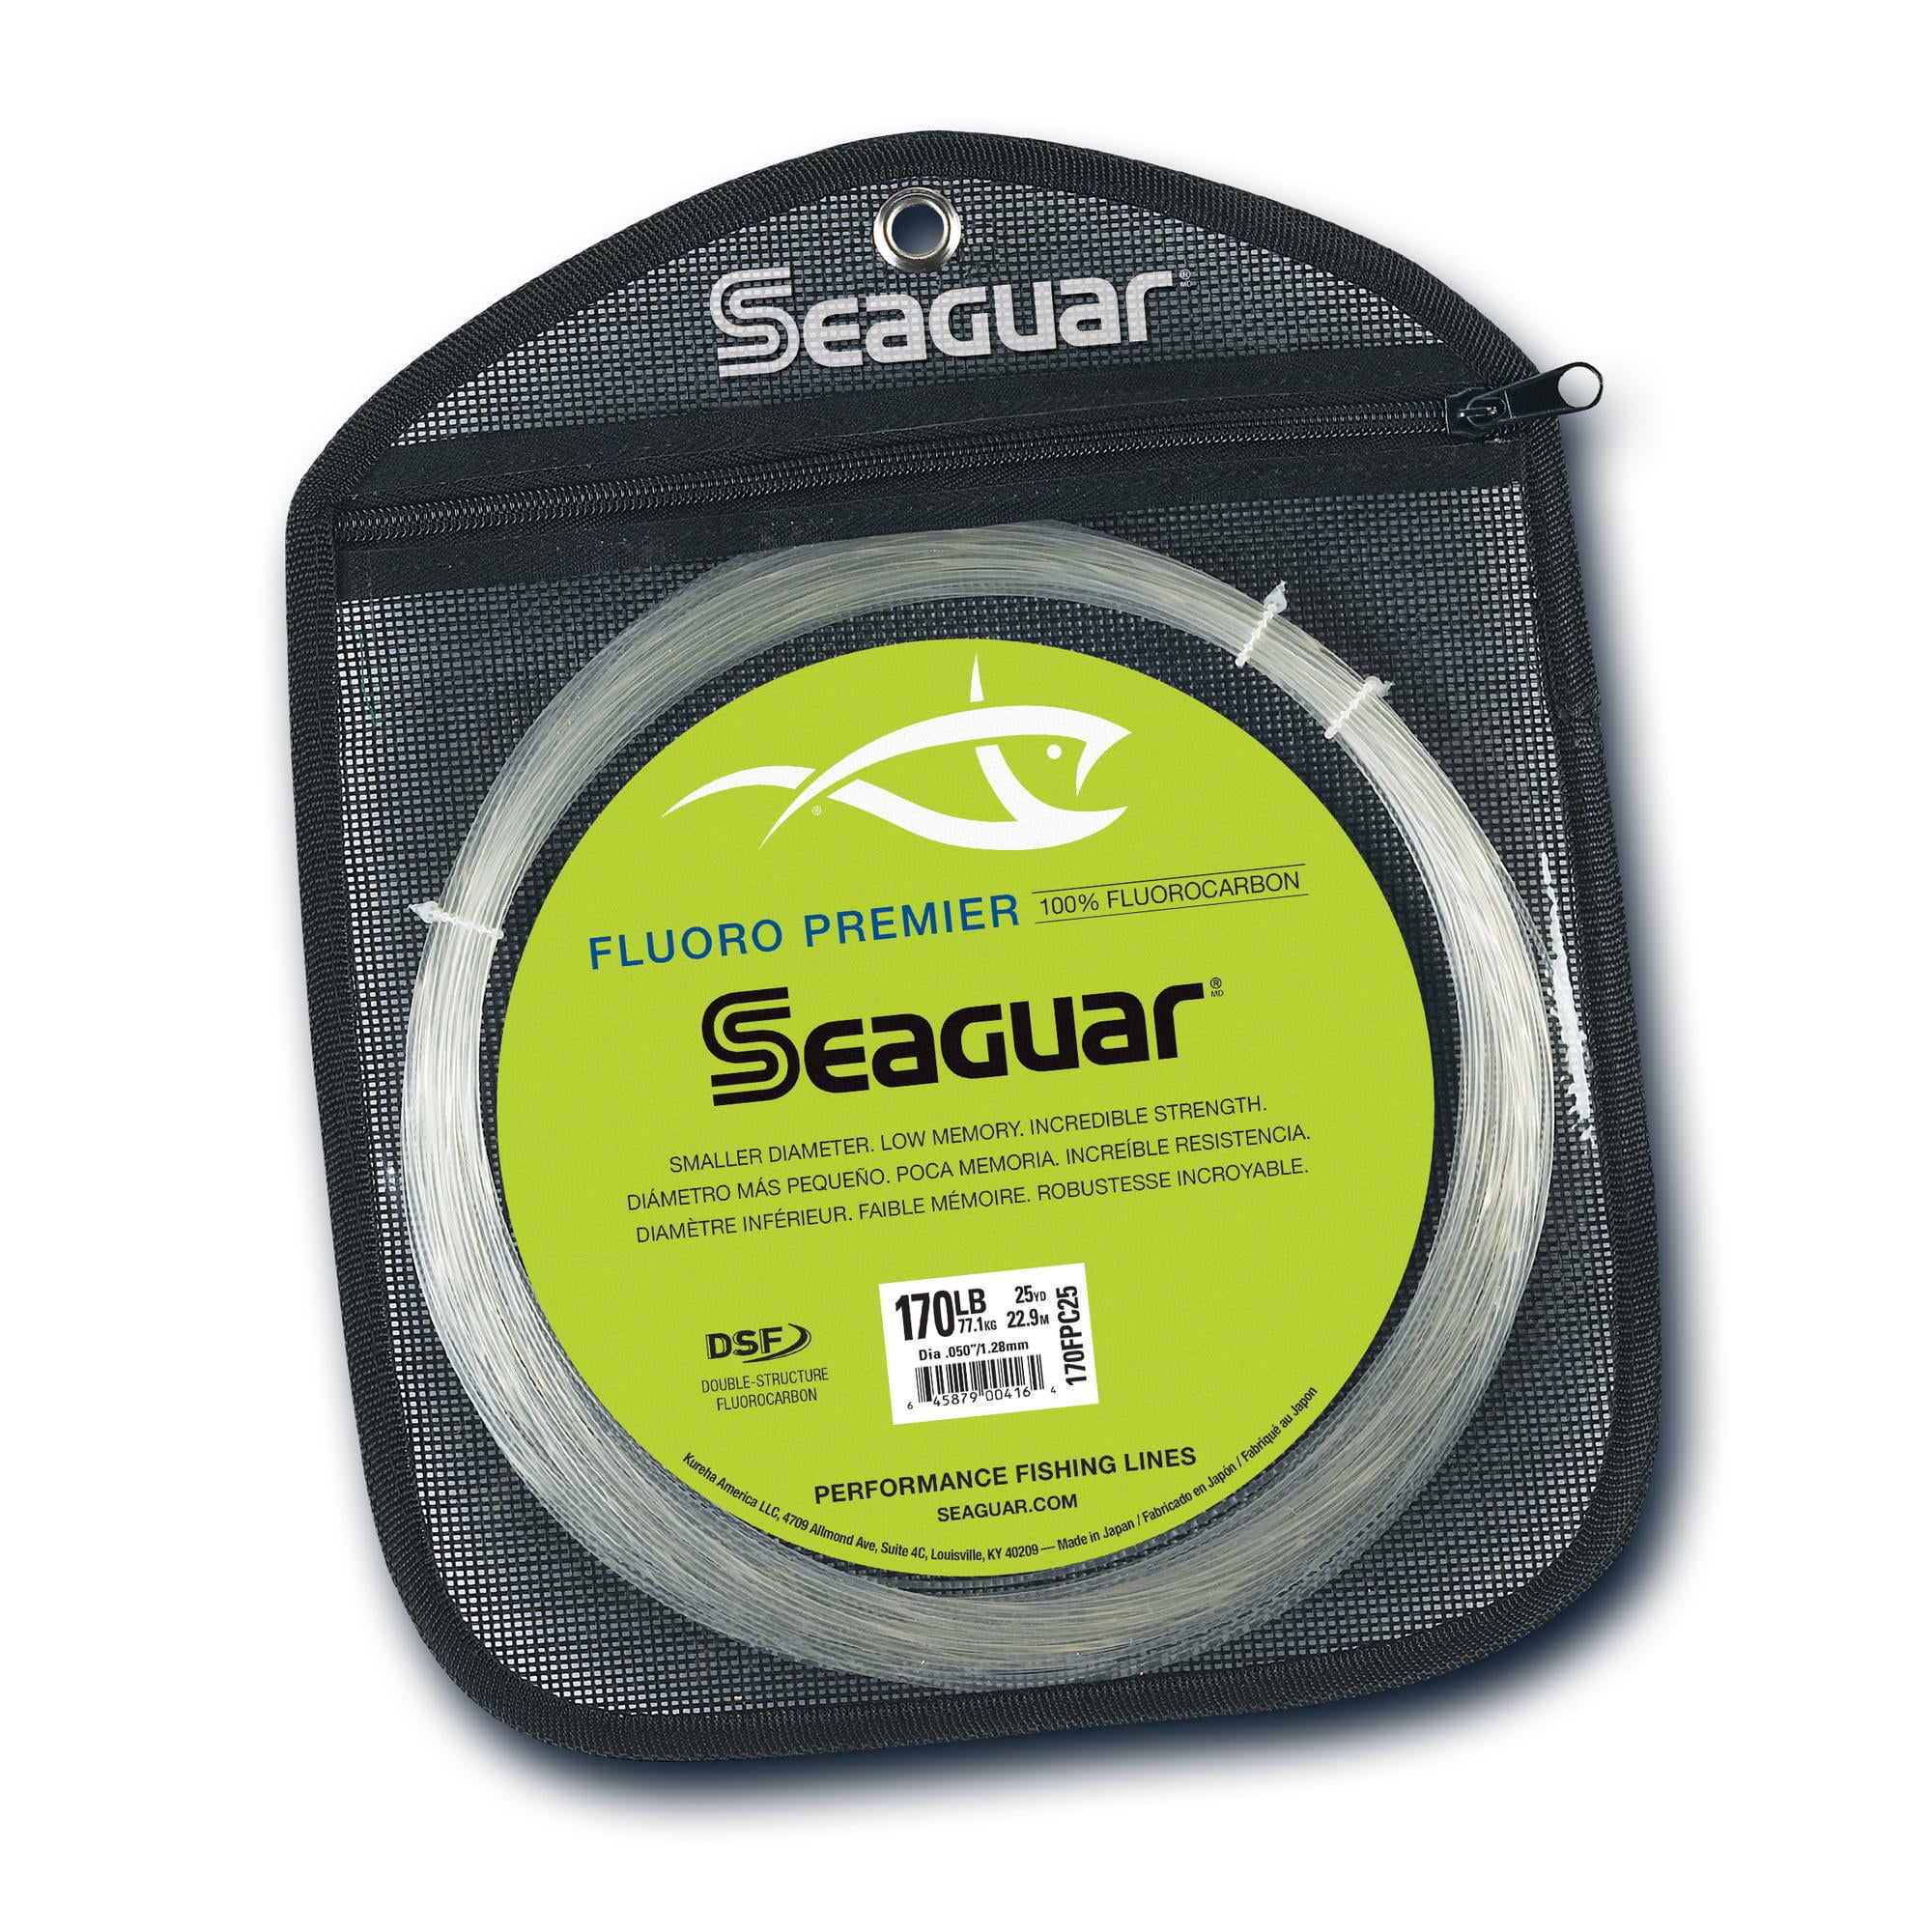 Seaguar Fluoro Premier 100% Fluorocarbon Fishing Line(DSF), 170lbs, 25yds  Break Strength/Length - 170FP25